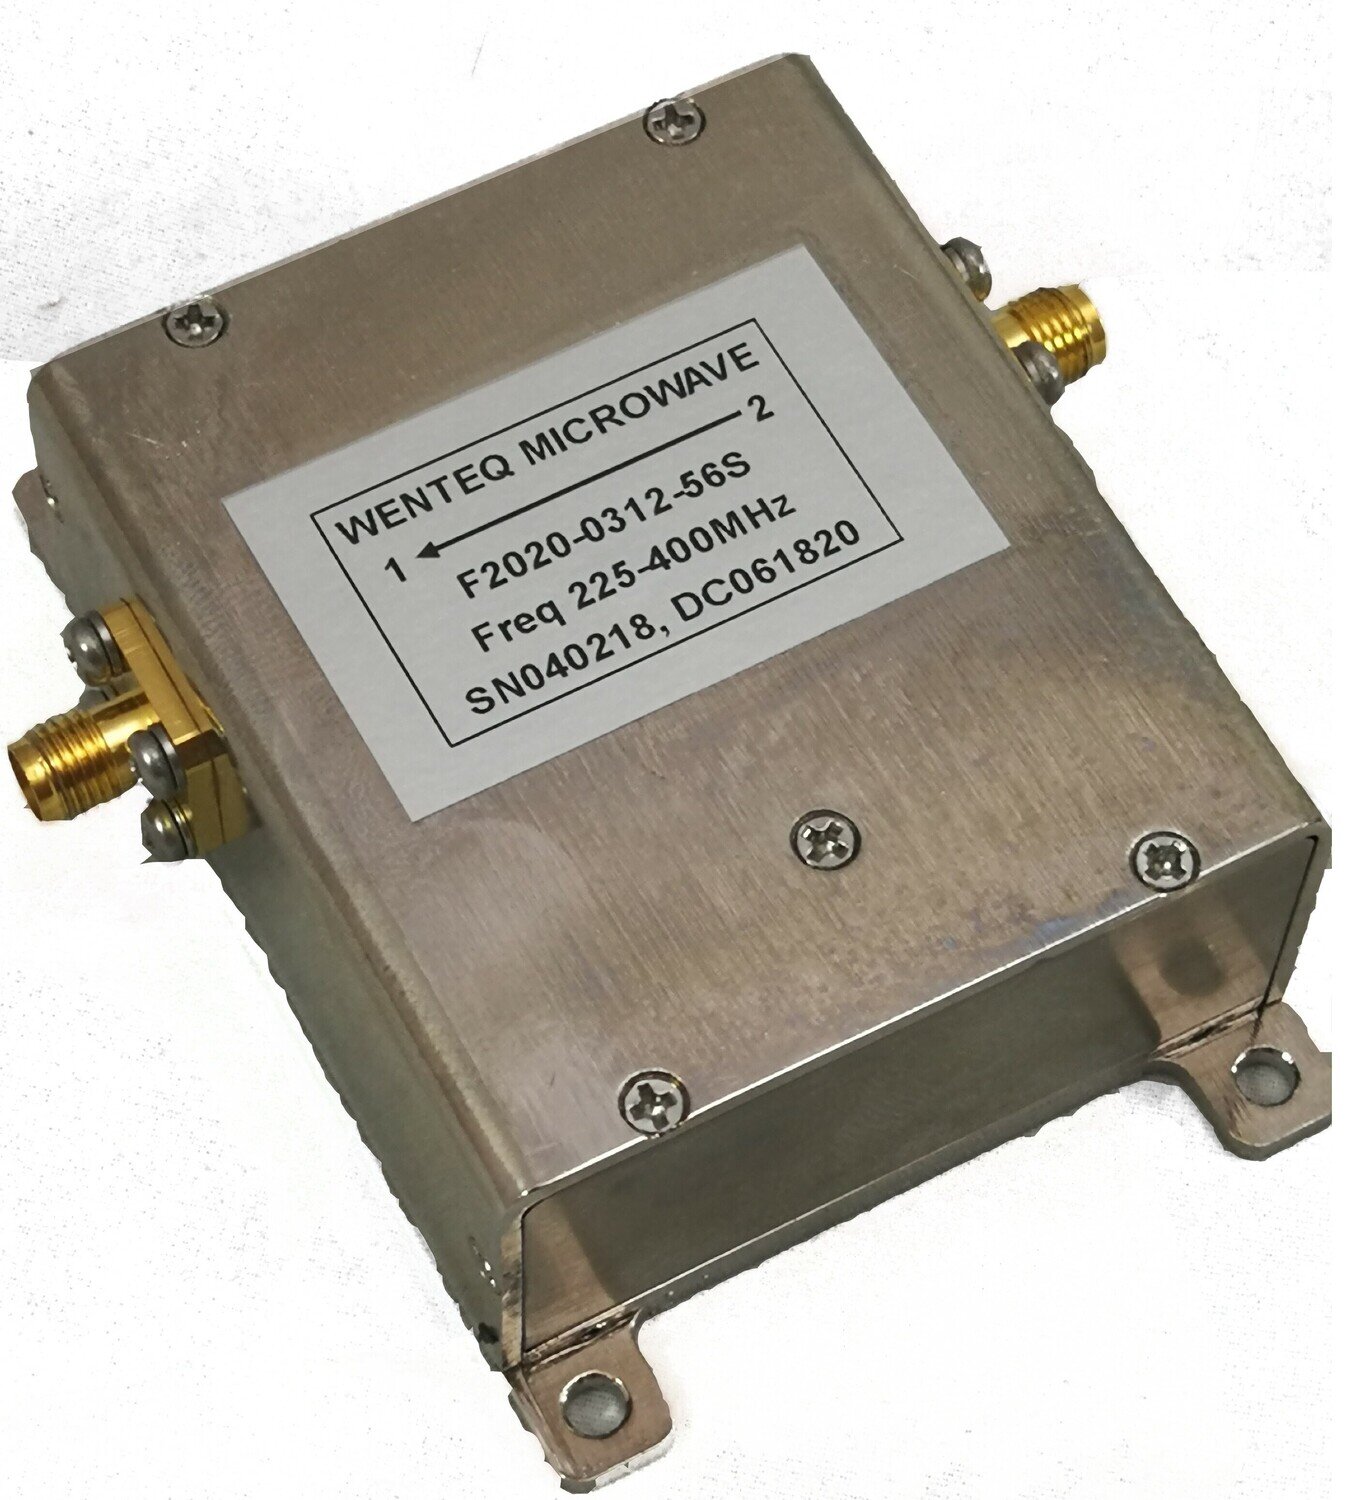 Broadband coaxial isolator
F2020-0312-56S